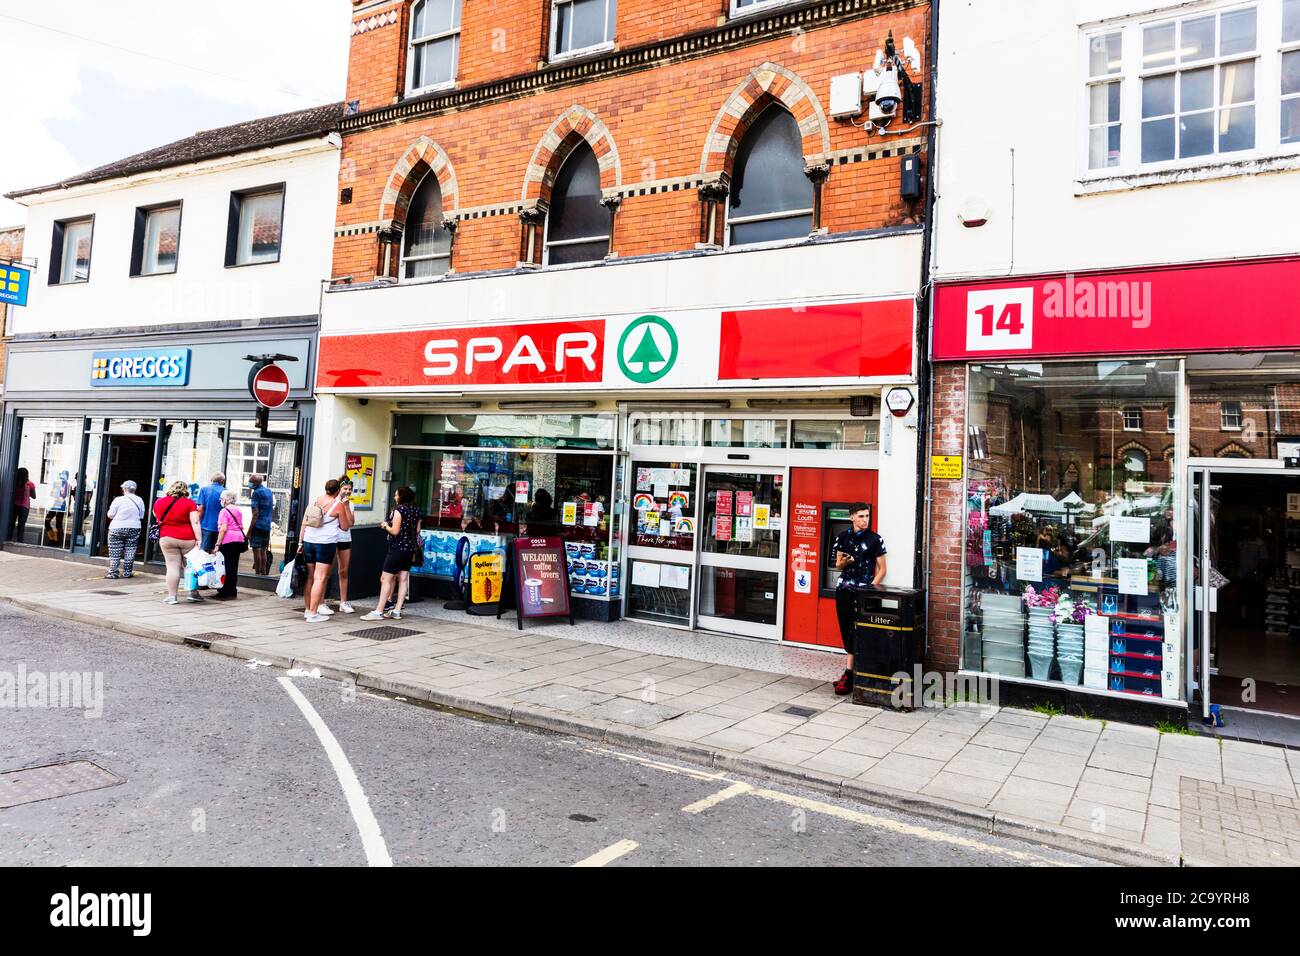 Spar, spar shop, spar shop front, spar sign, spar logo, spar, spar supermarket, spar store, Louth, Lincolnshire, UK, England, shop, store, sign, logo, Stock Photo